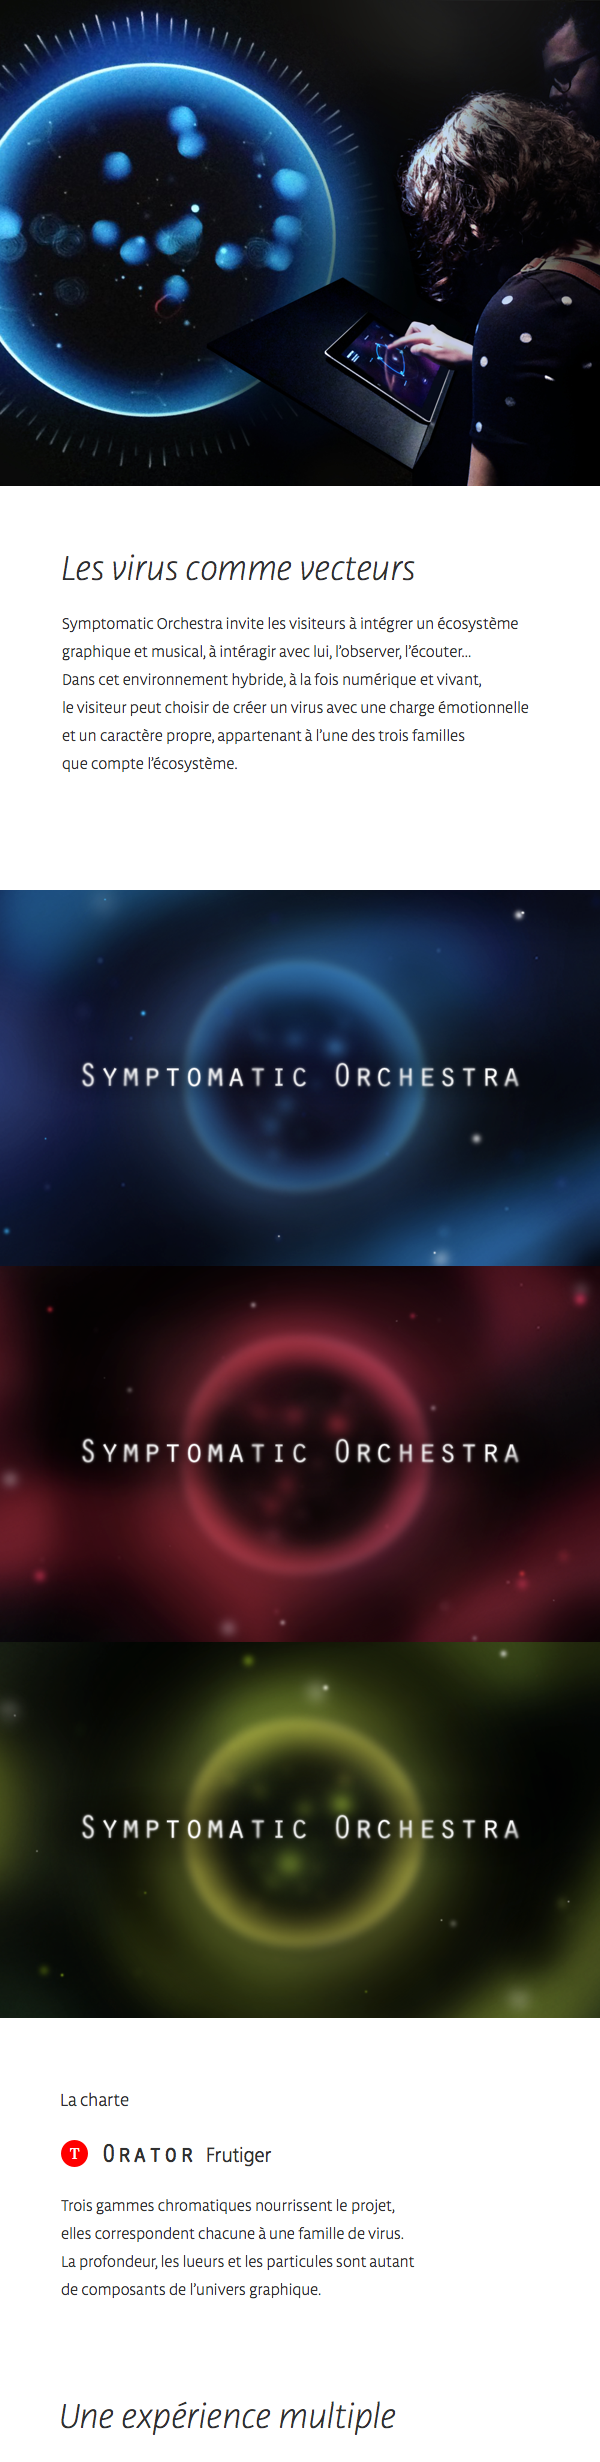 digital motion virus orchestre organic Biologic Particular colors depth installation artistic sound light darkness